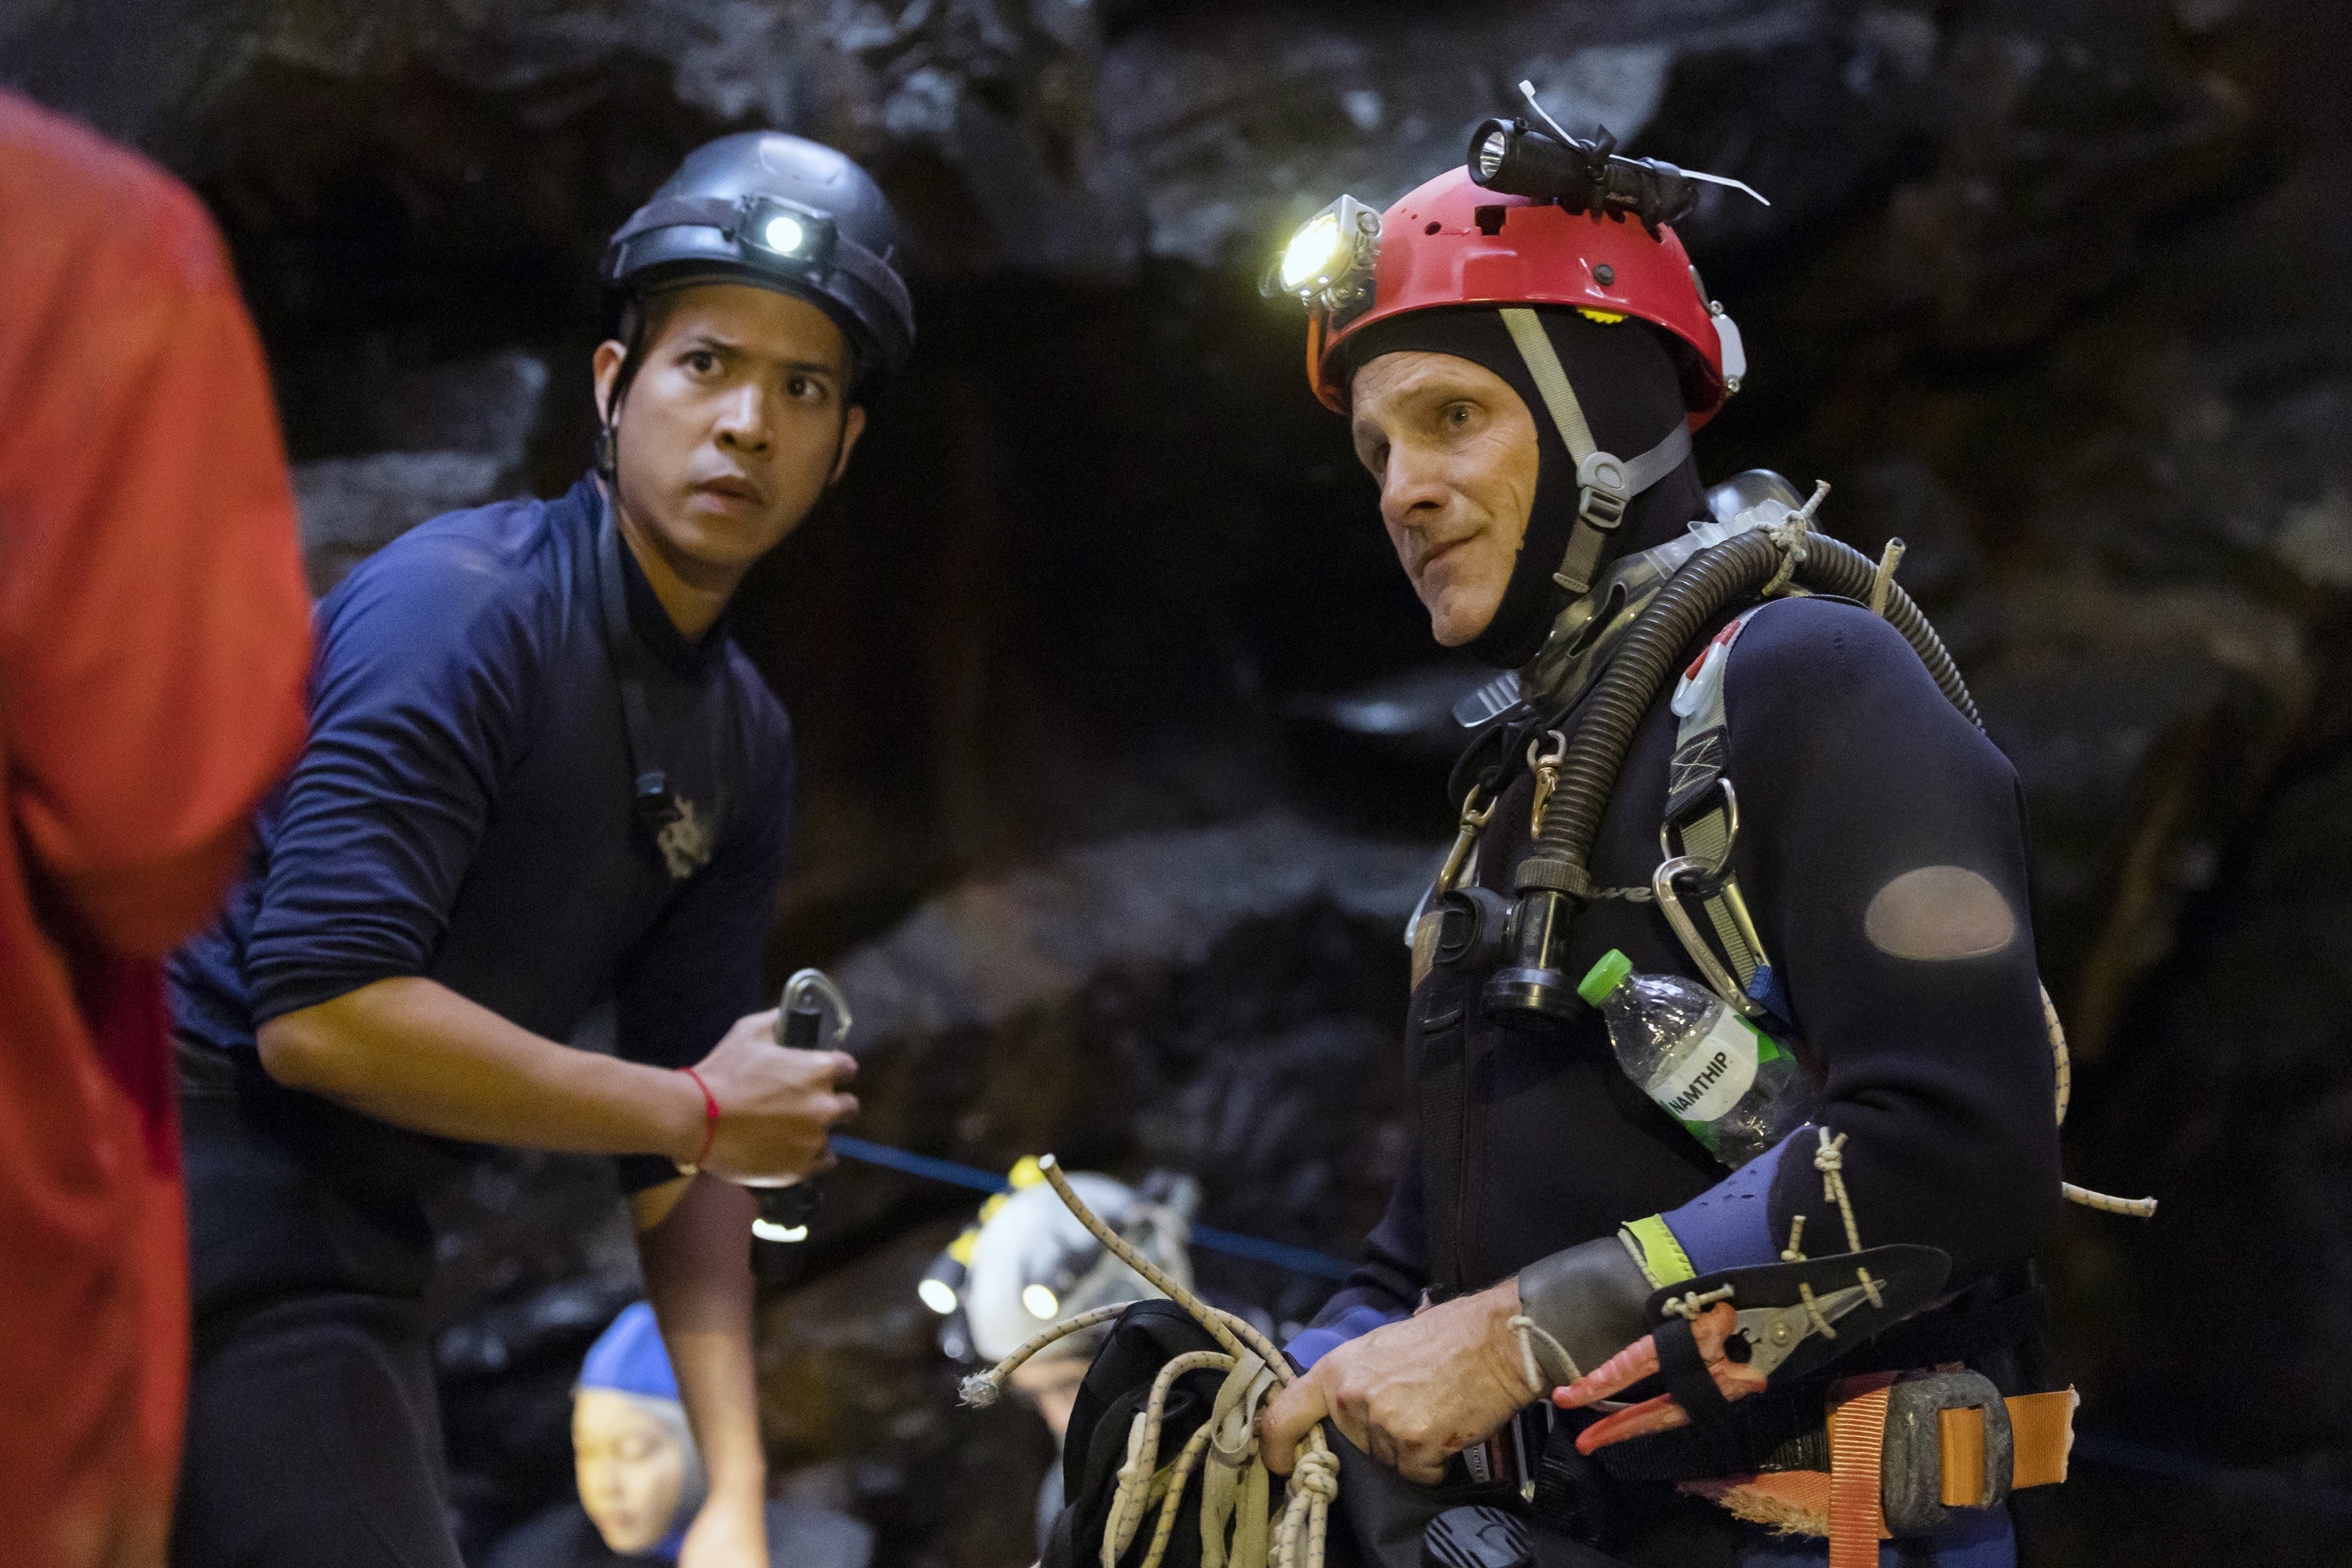 Thira Chutikul and Viggo Mortensen prepare to go cave diving